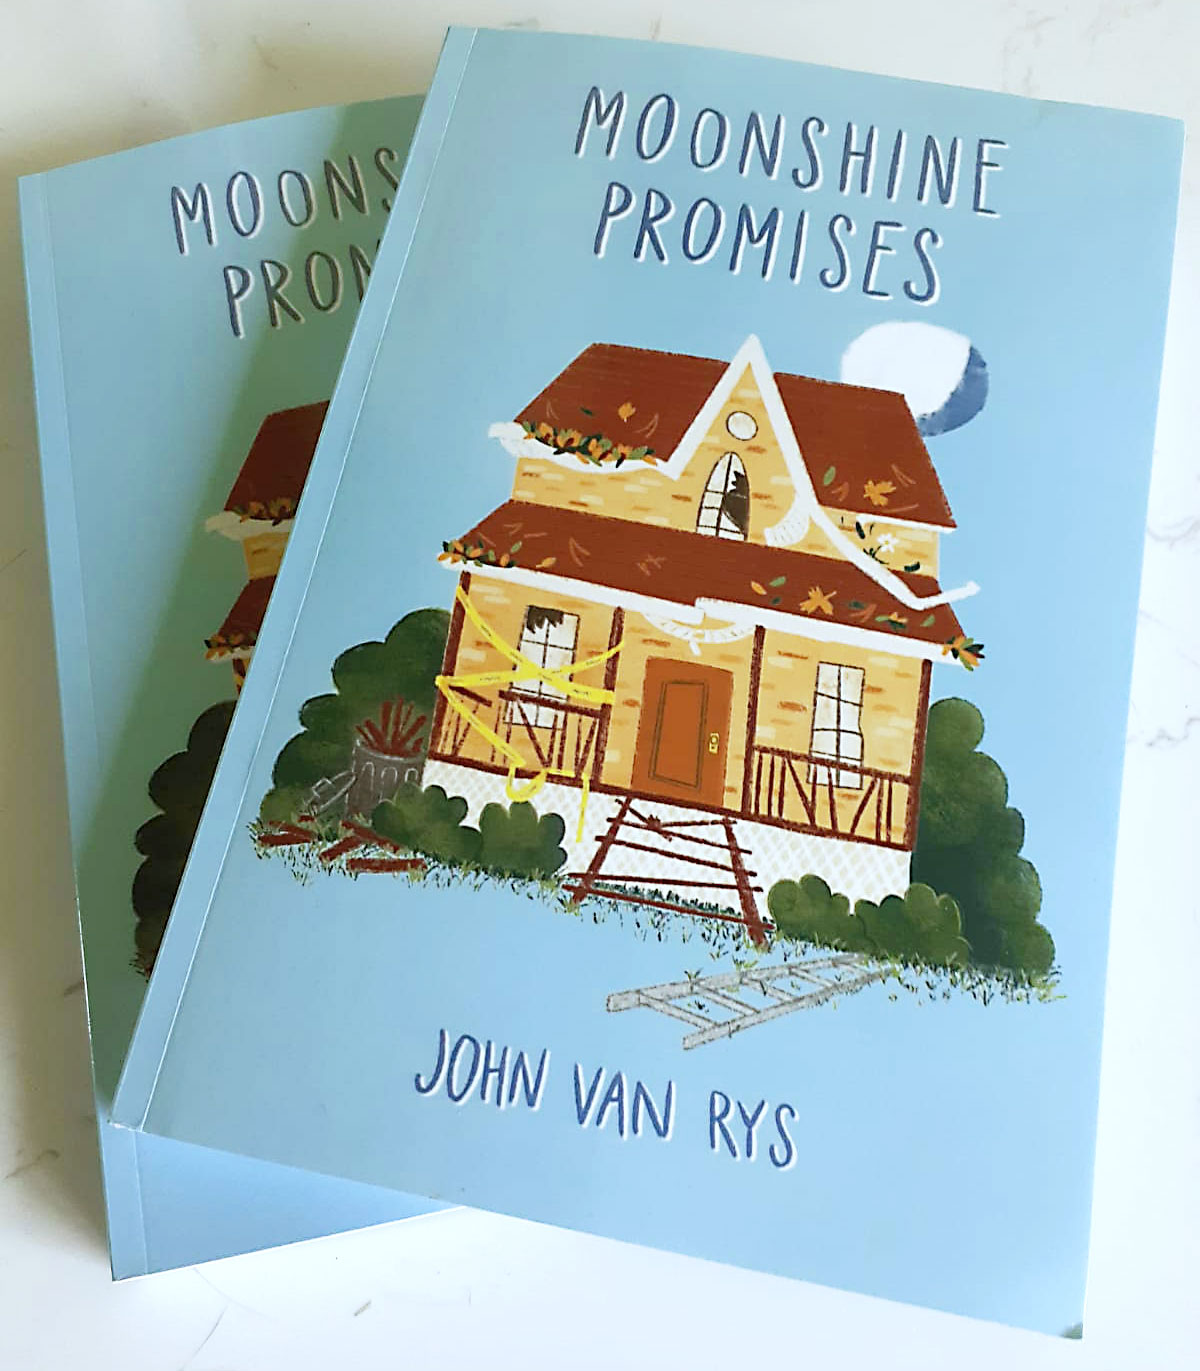 Author Copies of John Van Rys's novel Moonshine Promises